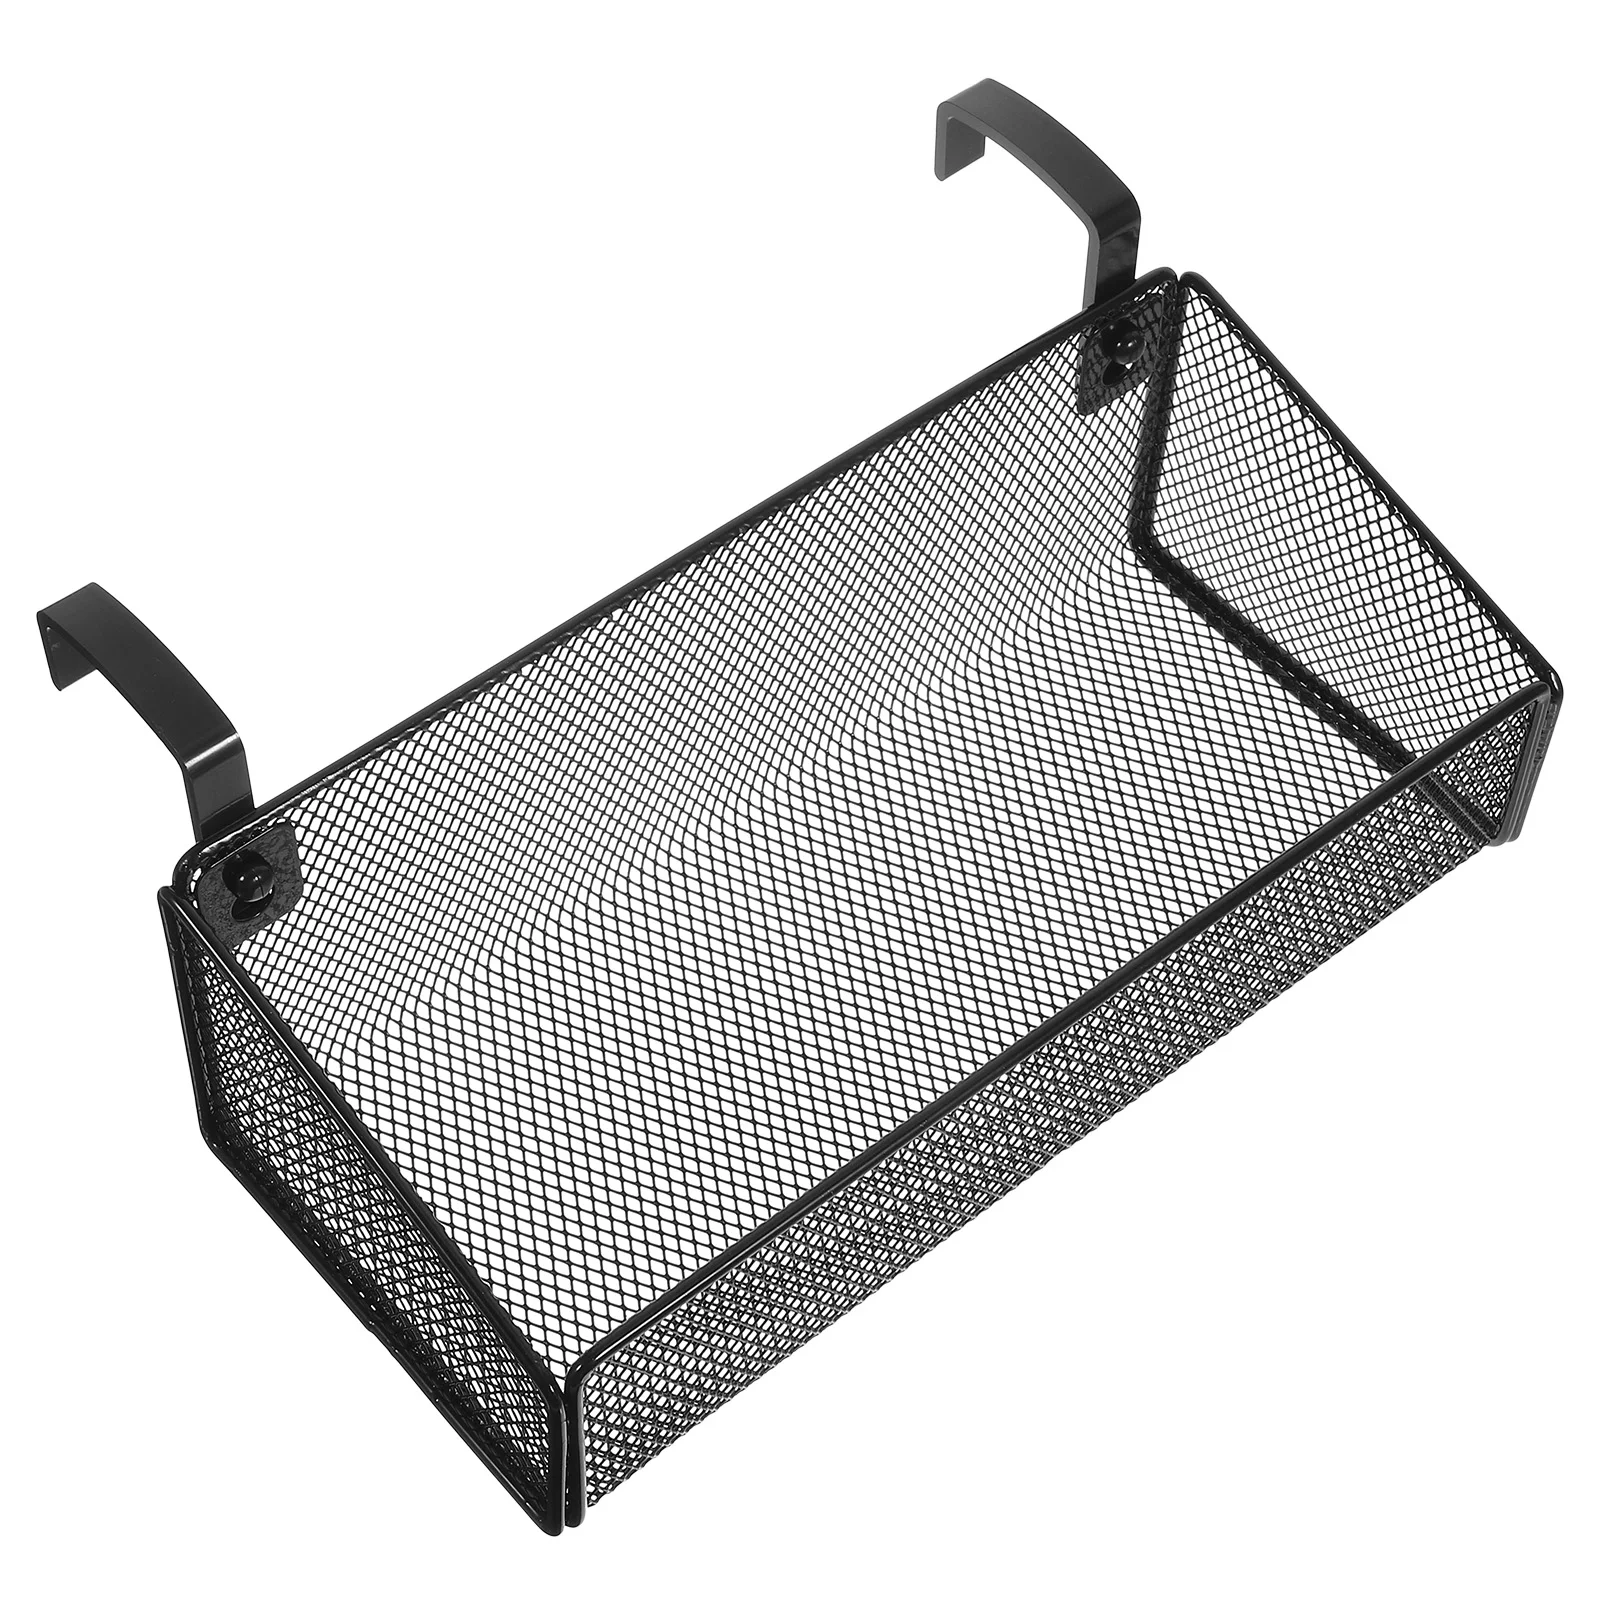 

Hanging Storage Basket Bedside Dormitory Supplies Sundries Metal Organizer Holder Bunk Iron